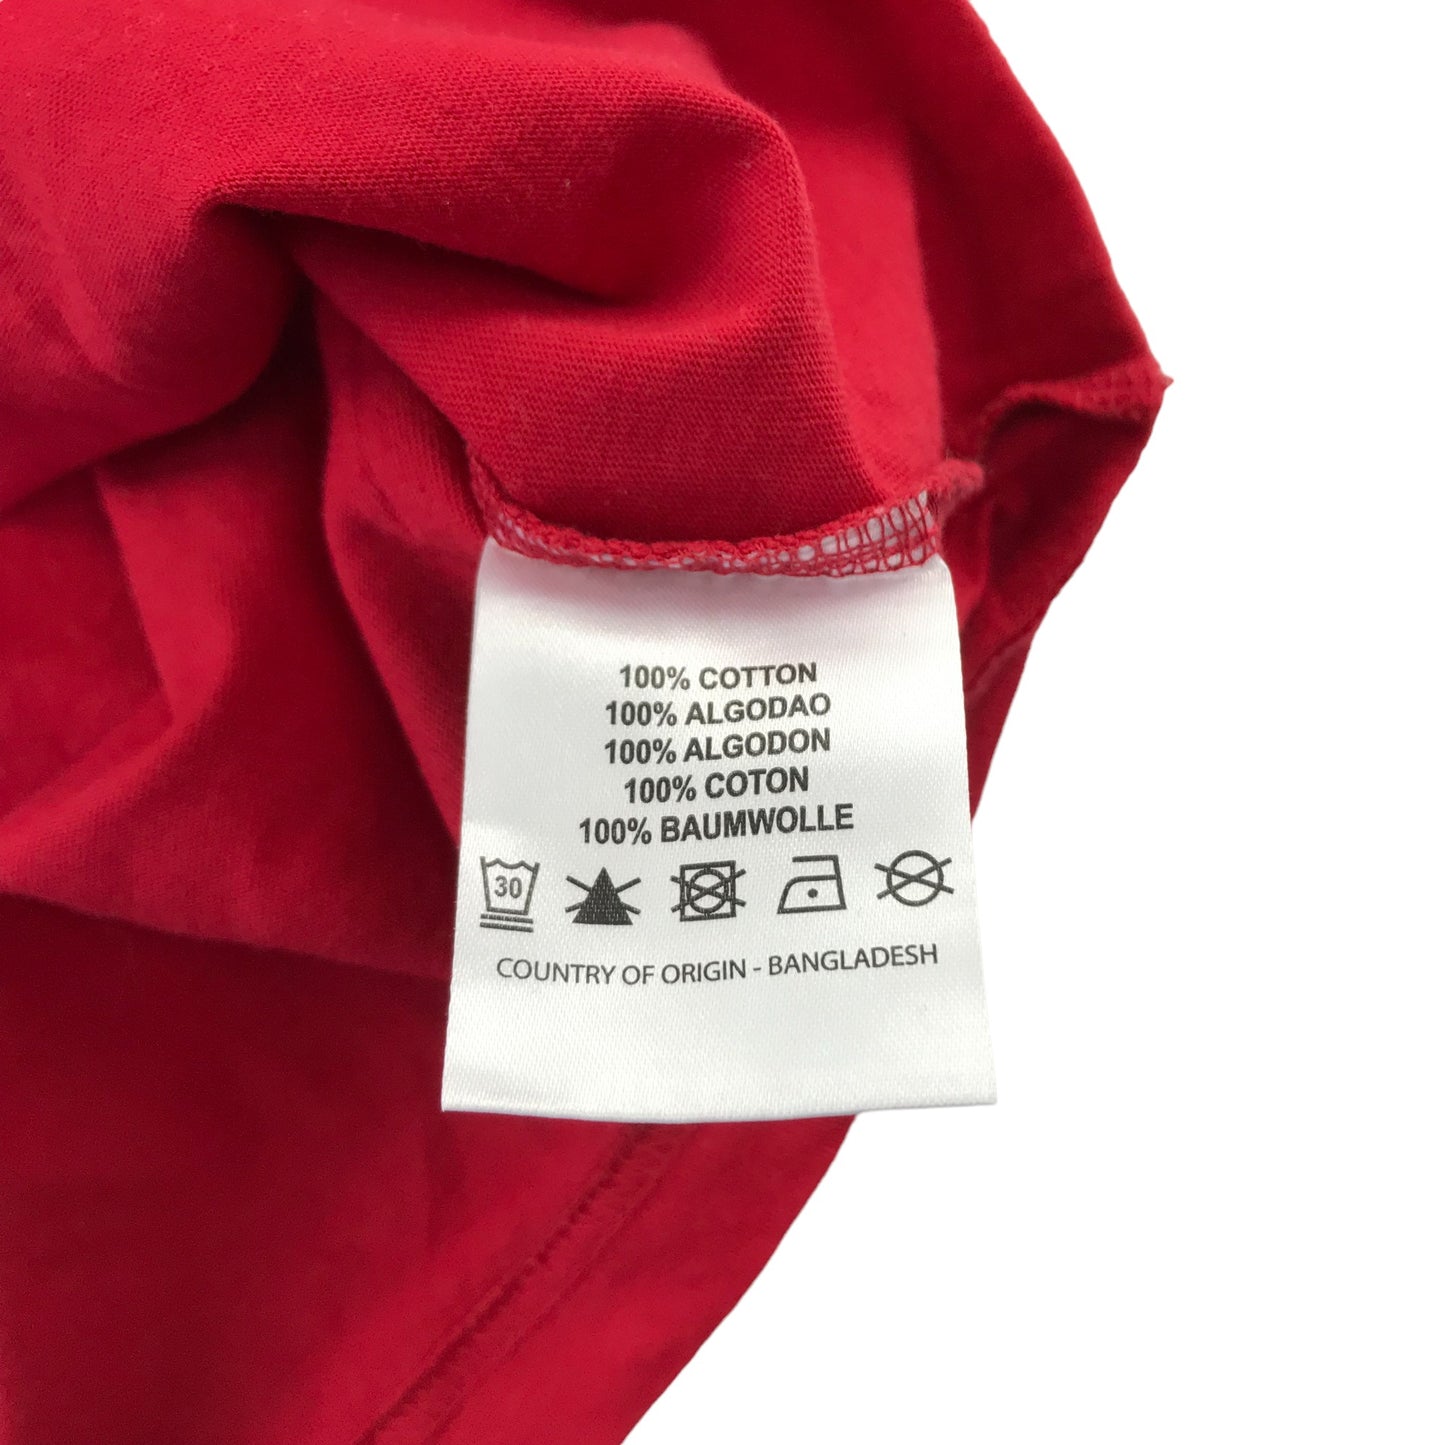 England T-shirt Size M Red Short Sleeve Three Lions Logo Cotton